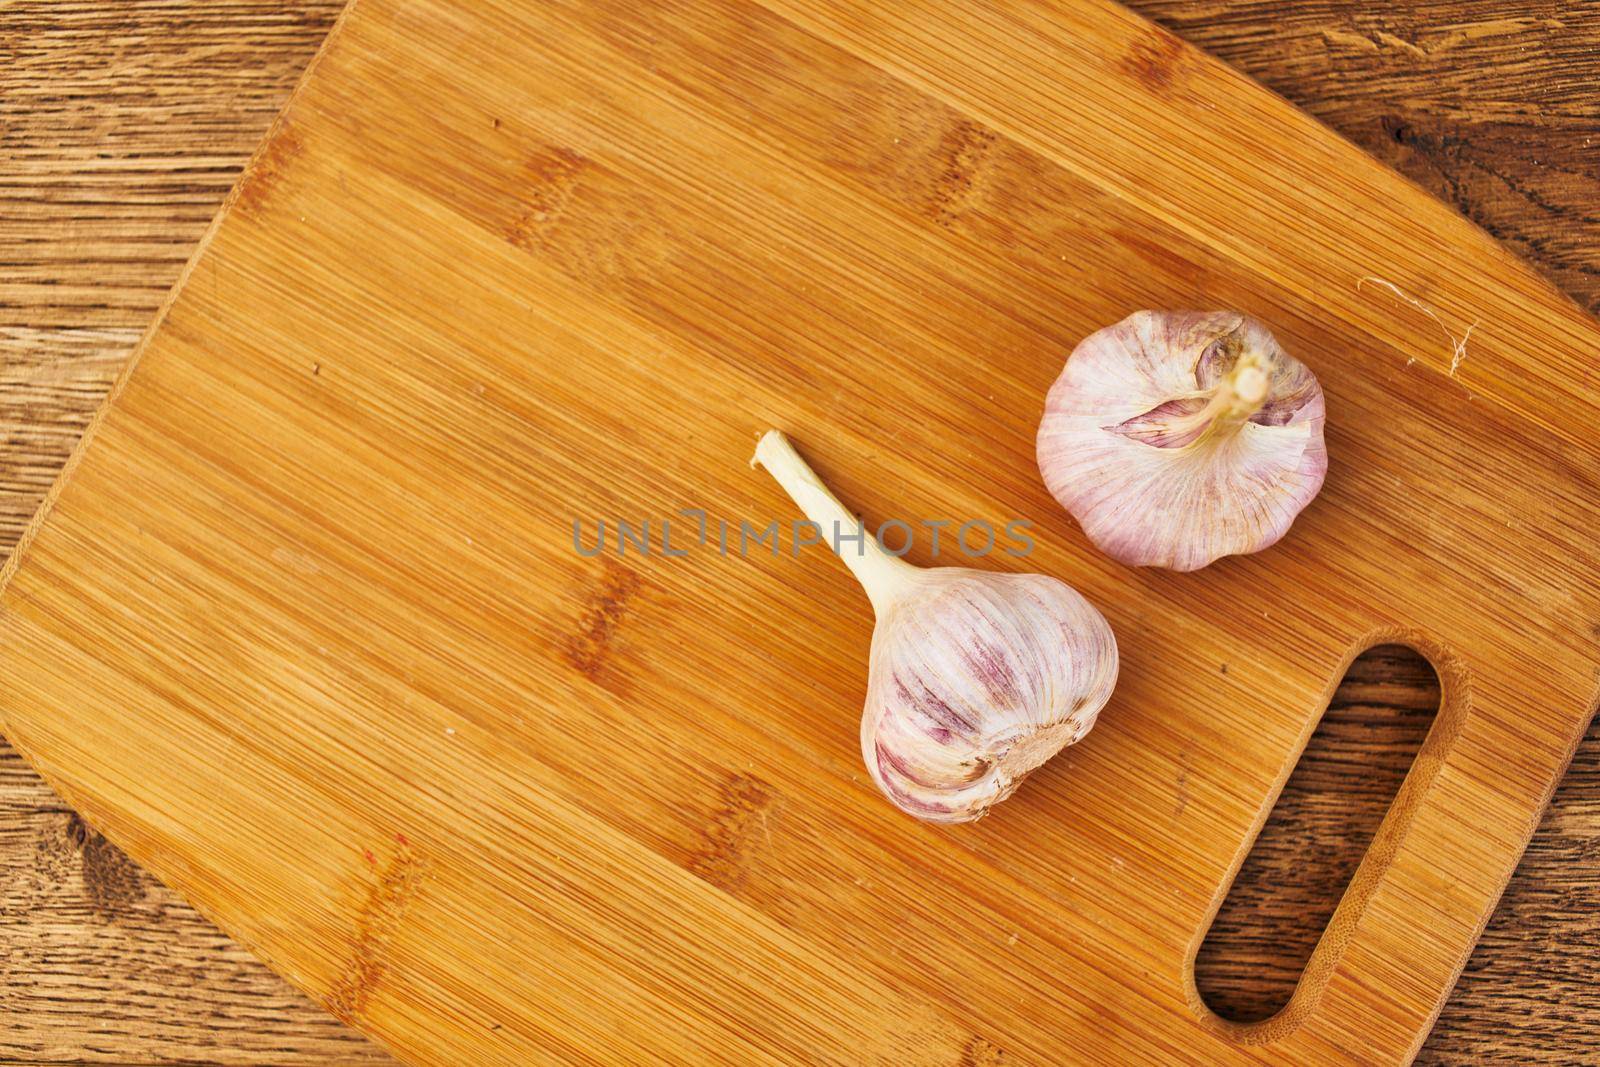 kitchen food garlic cutting board natural product by Vichizh